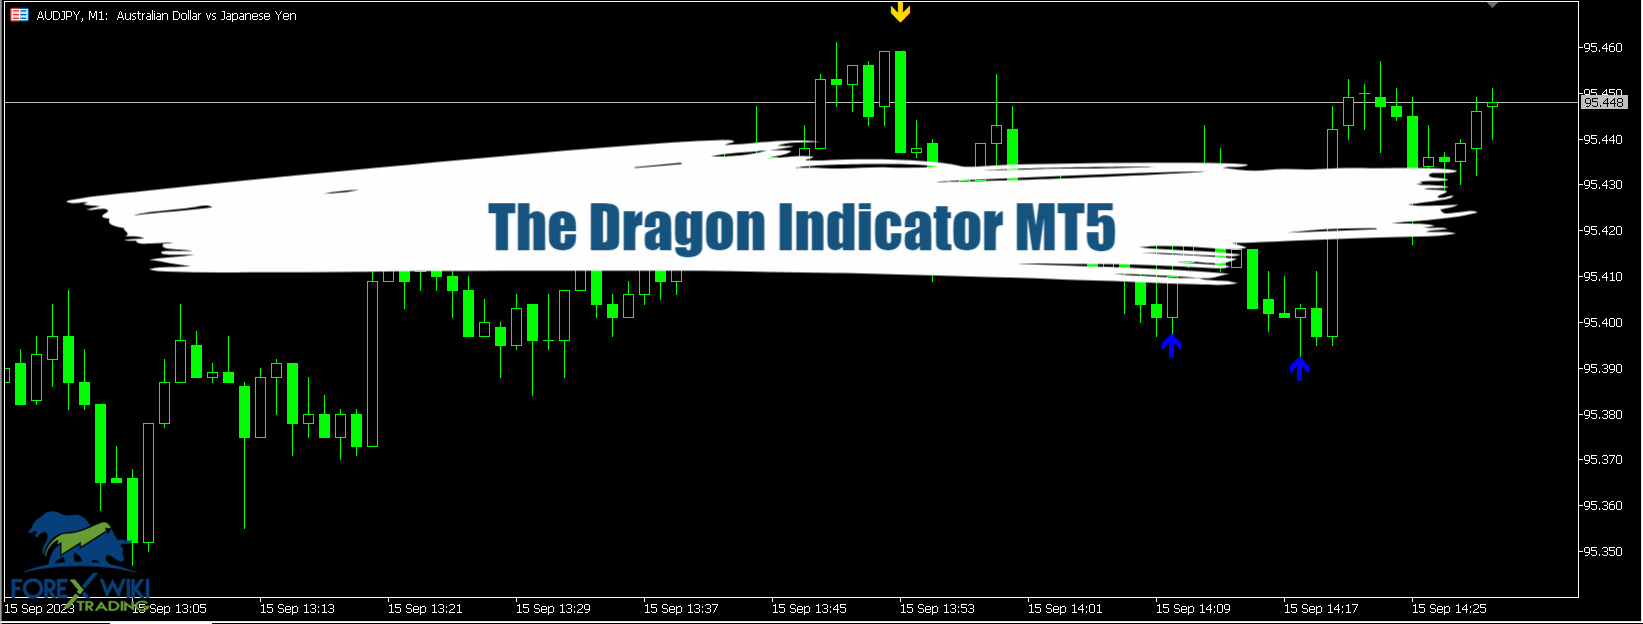 The Dragon Indicator MT5 - Free Download 26